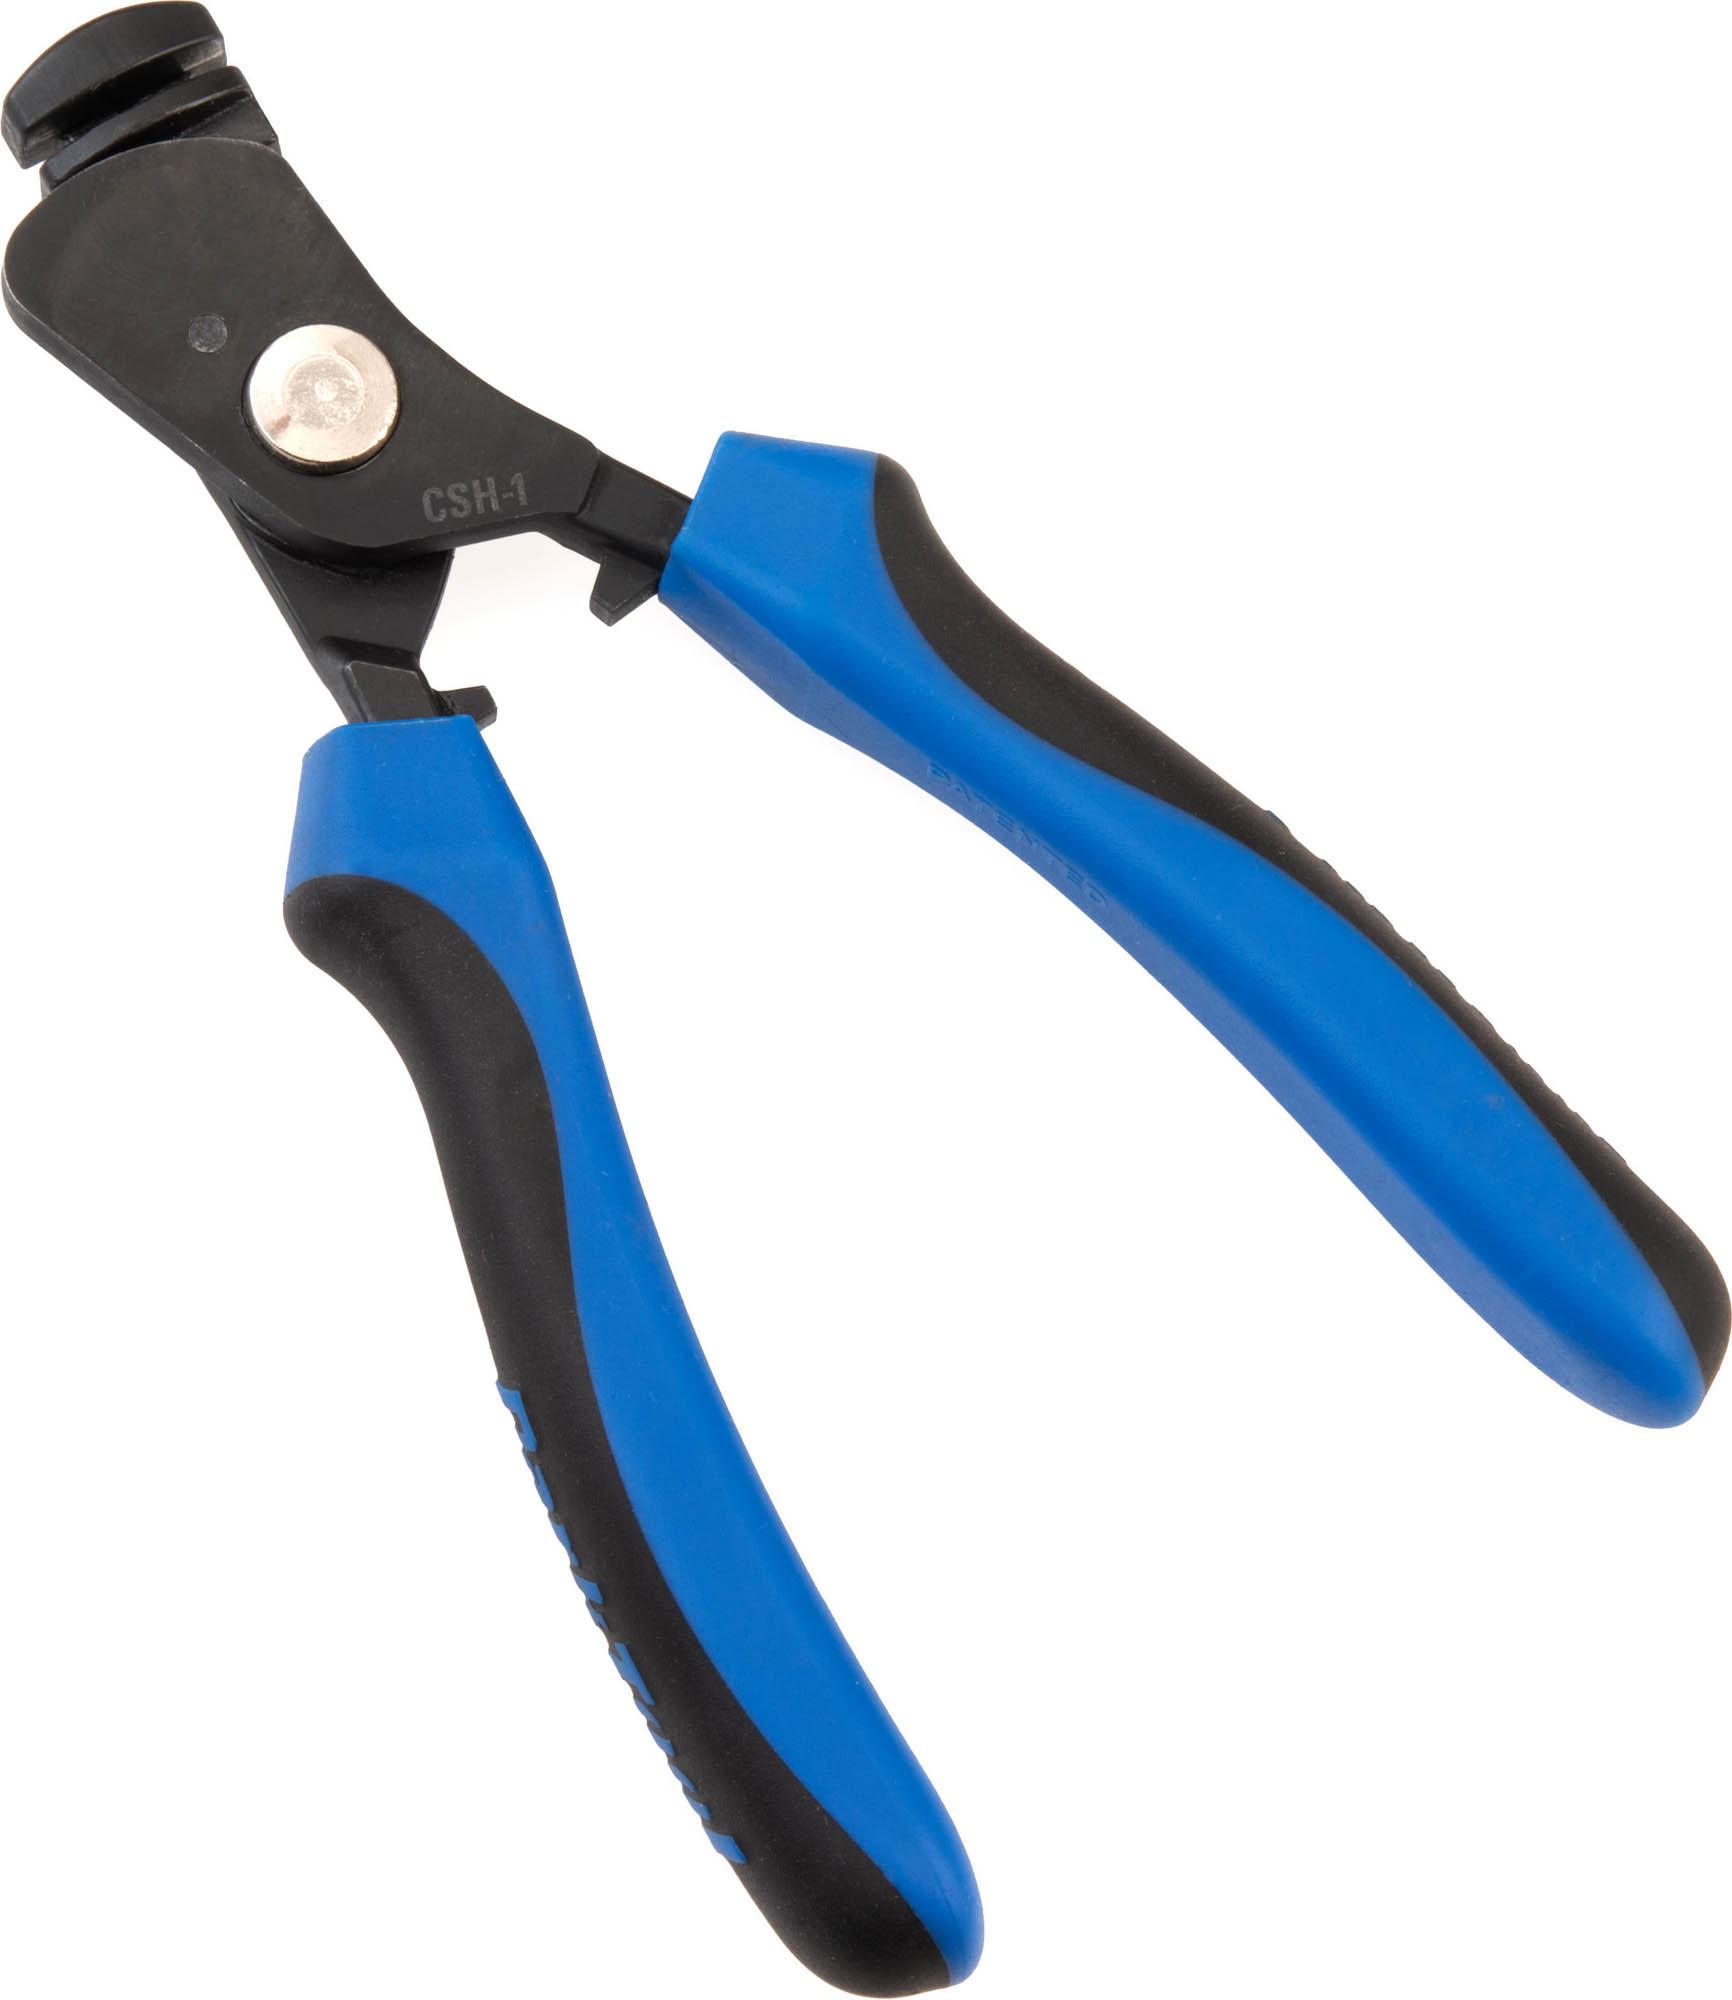 Park Tool Clamping Spoke Holder Csh-1 - Blue/black